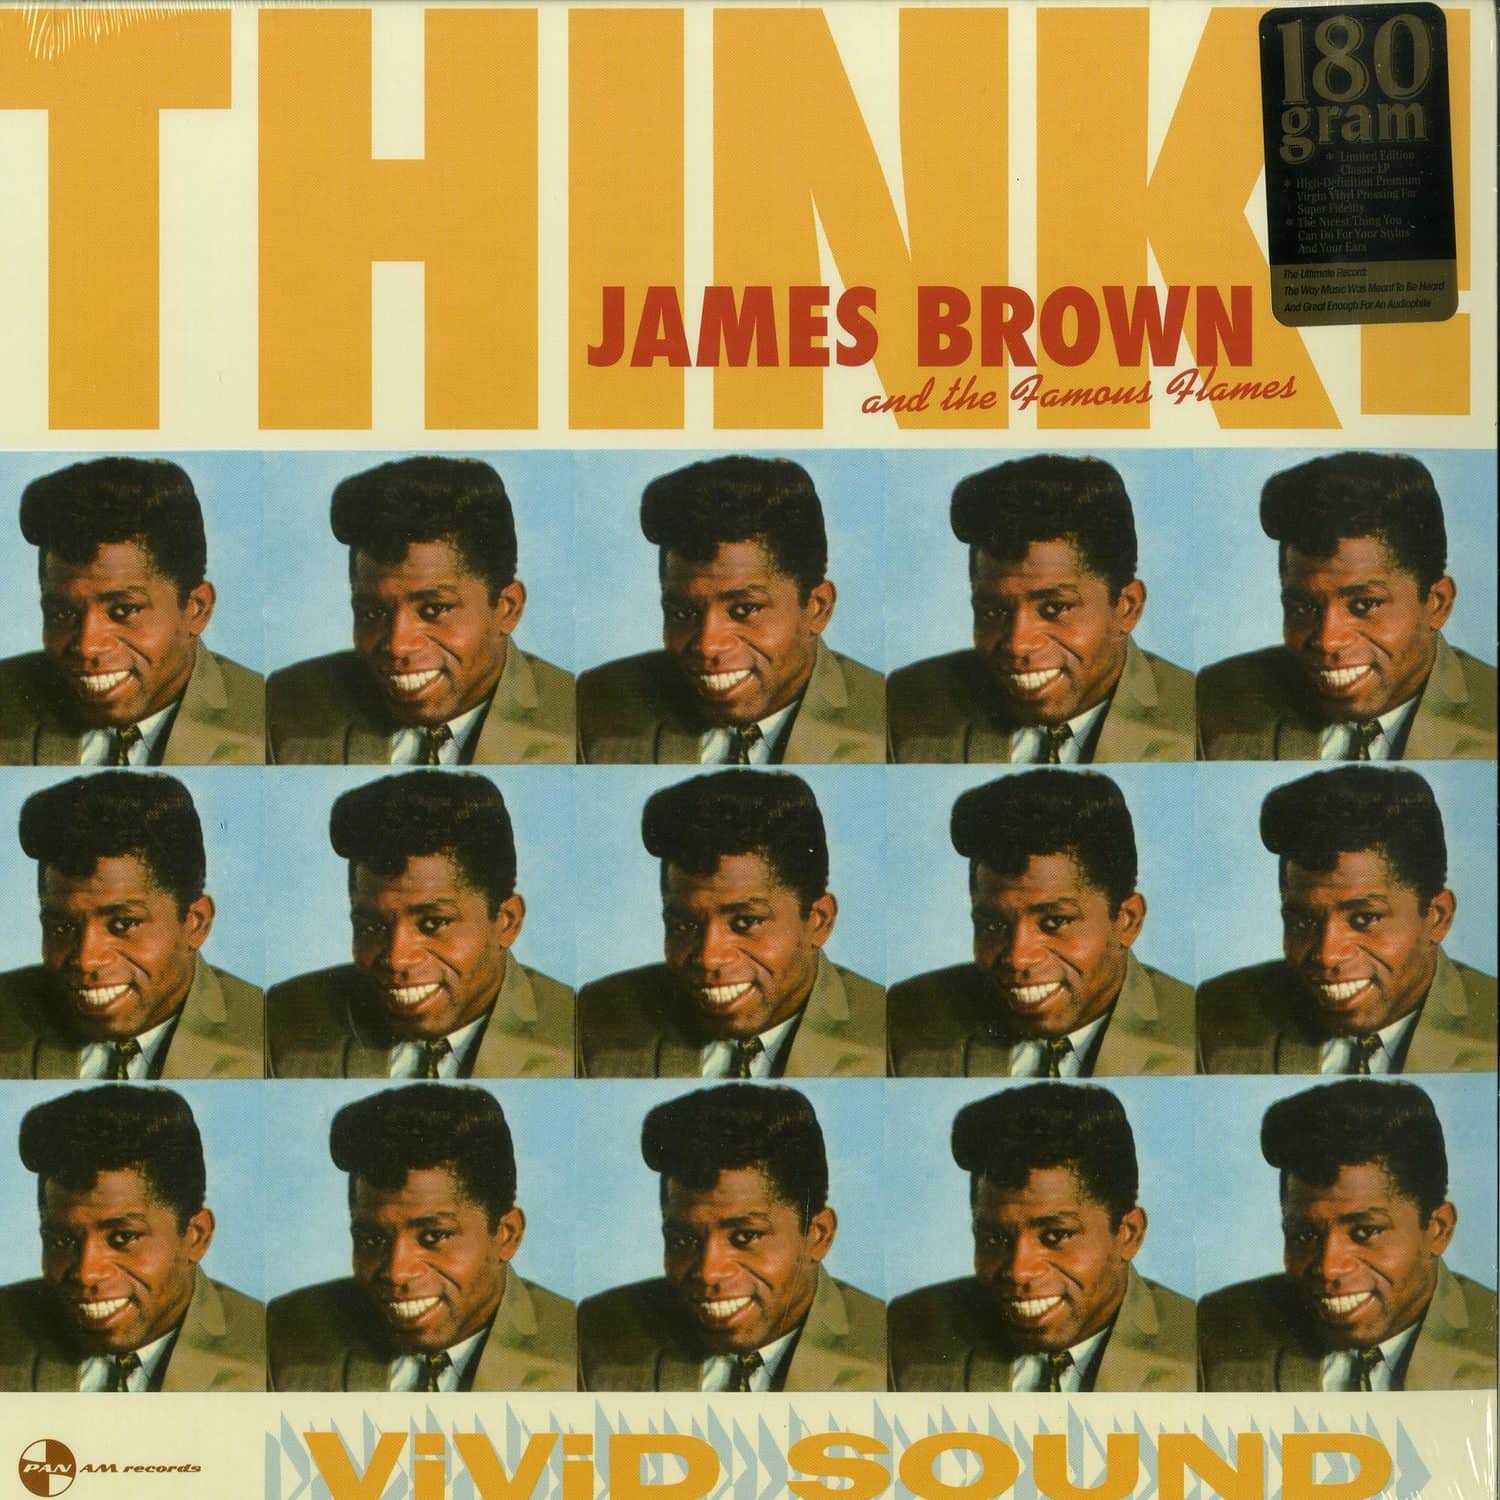 James Brown - THINK! 